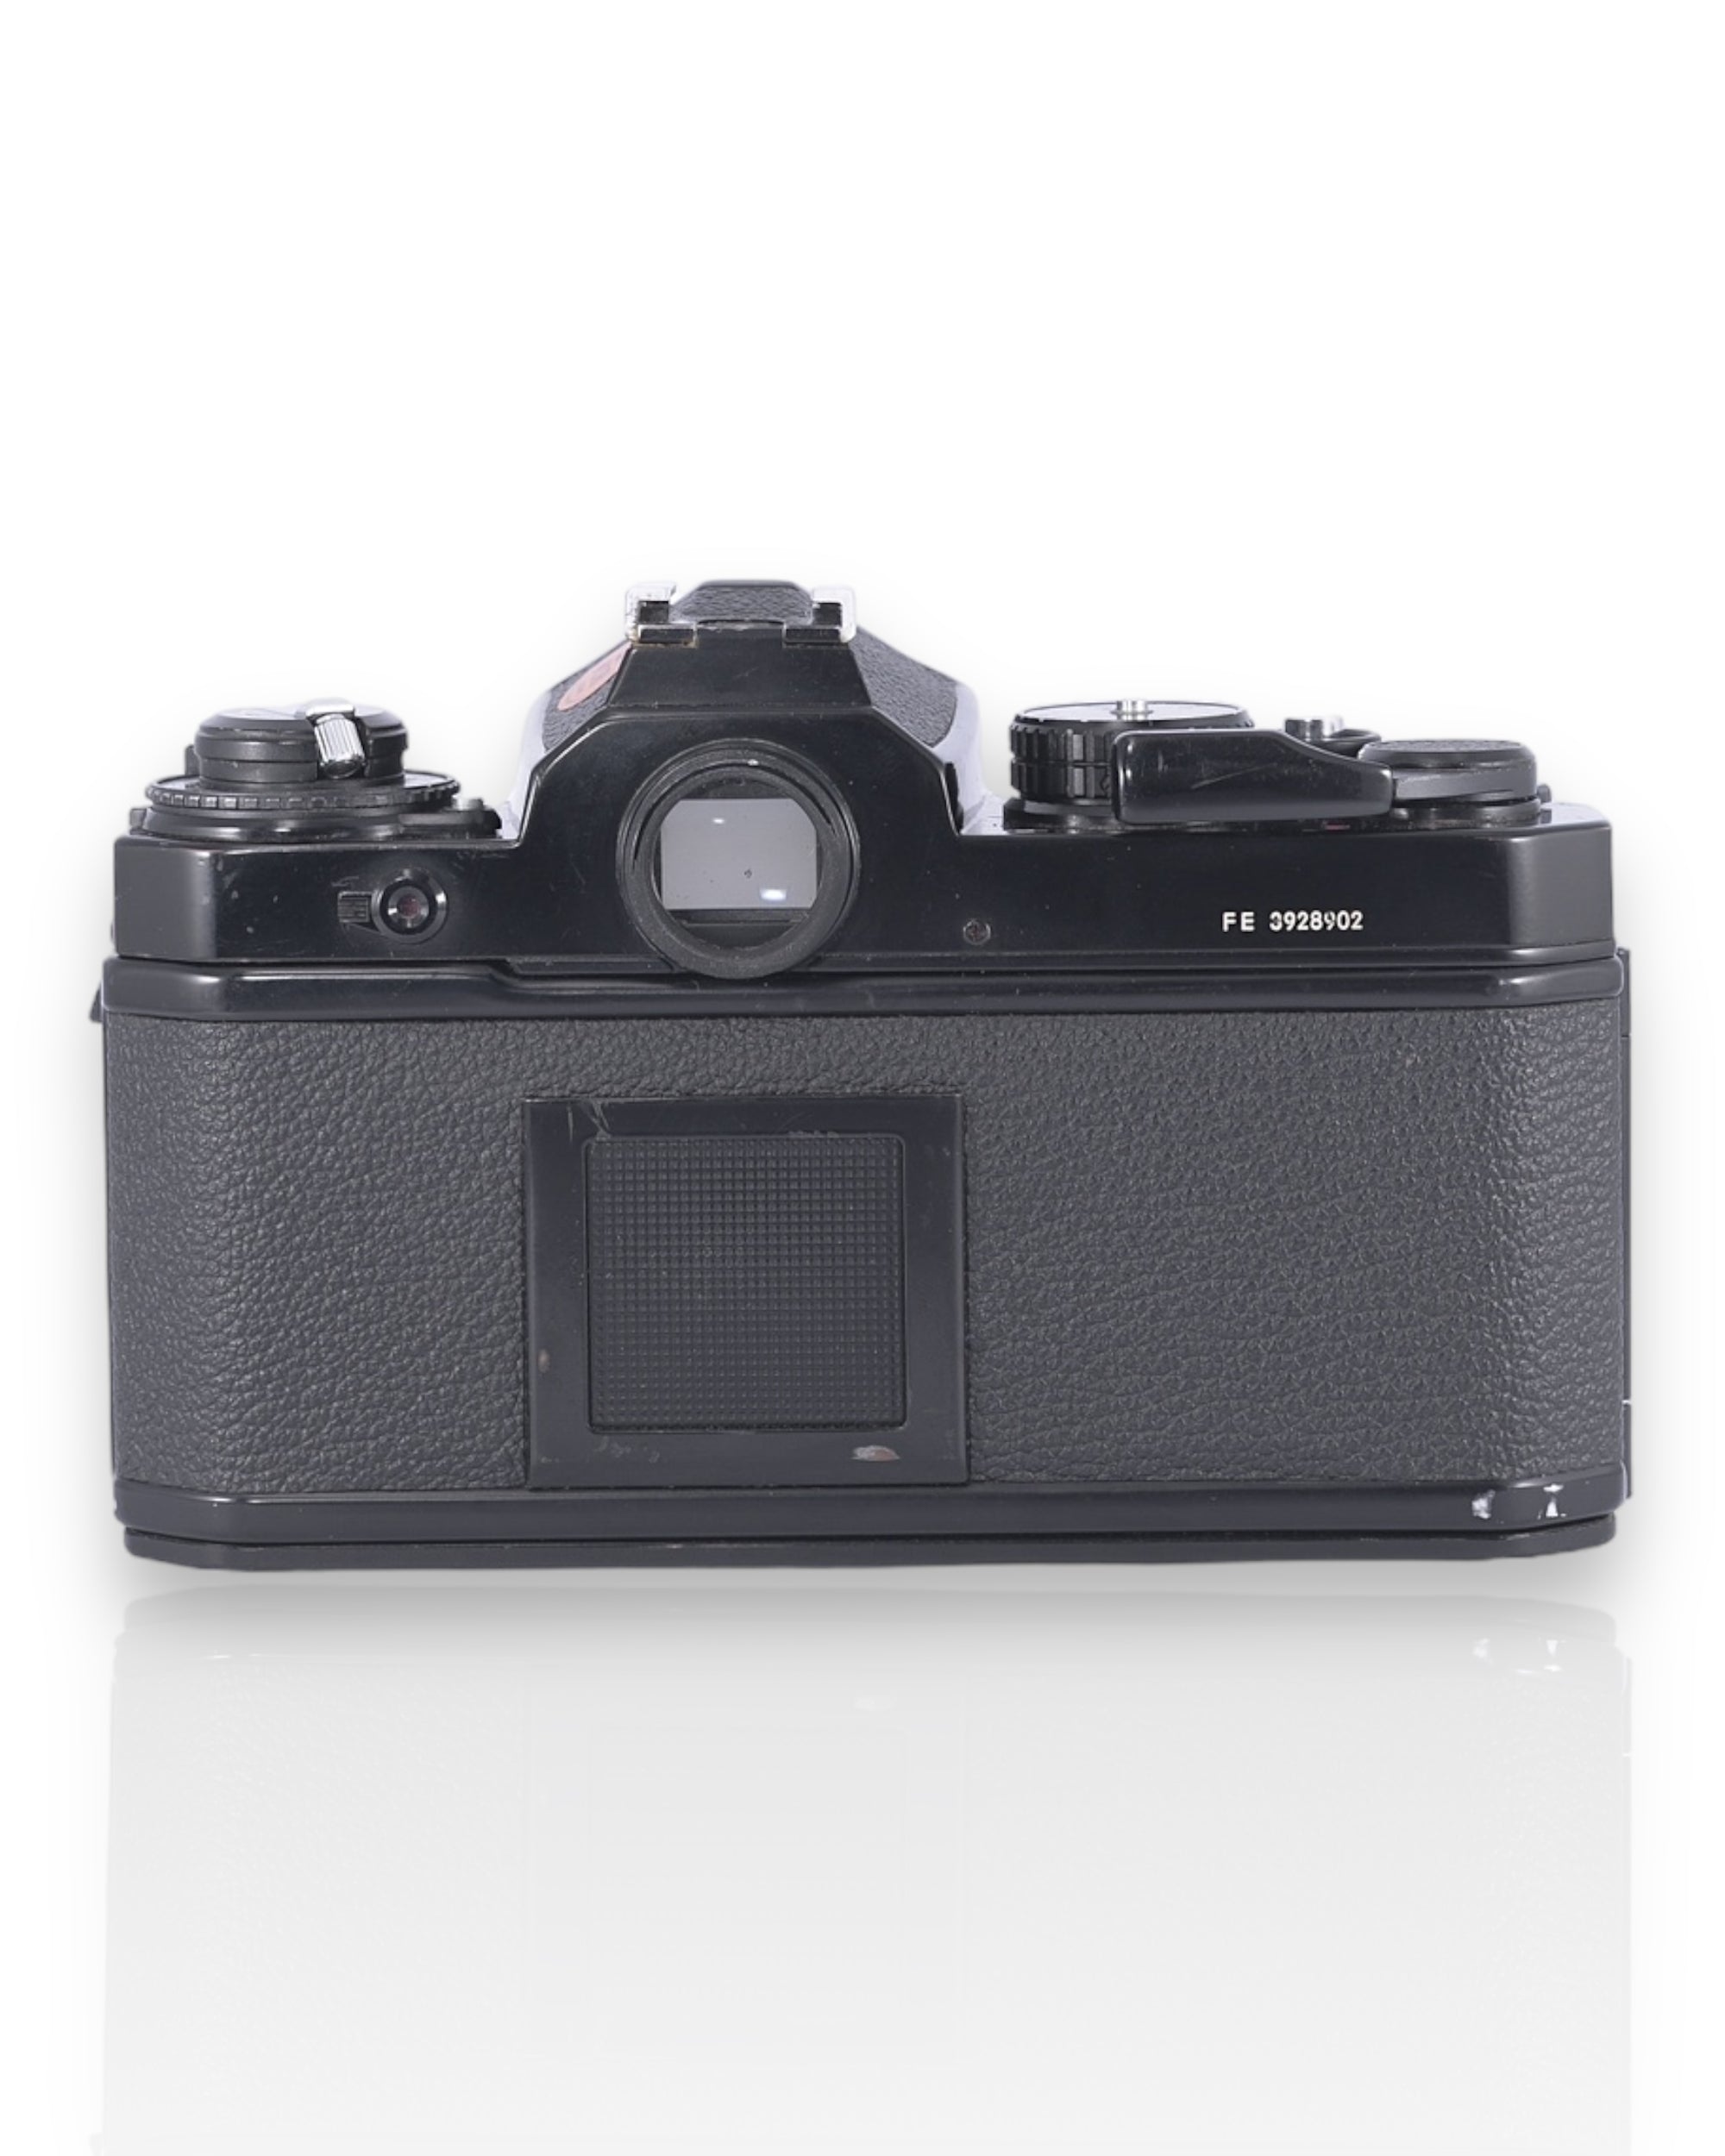 Nikon FE 35mm SLR film camera with 50mm f2 len